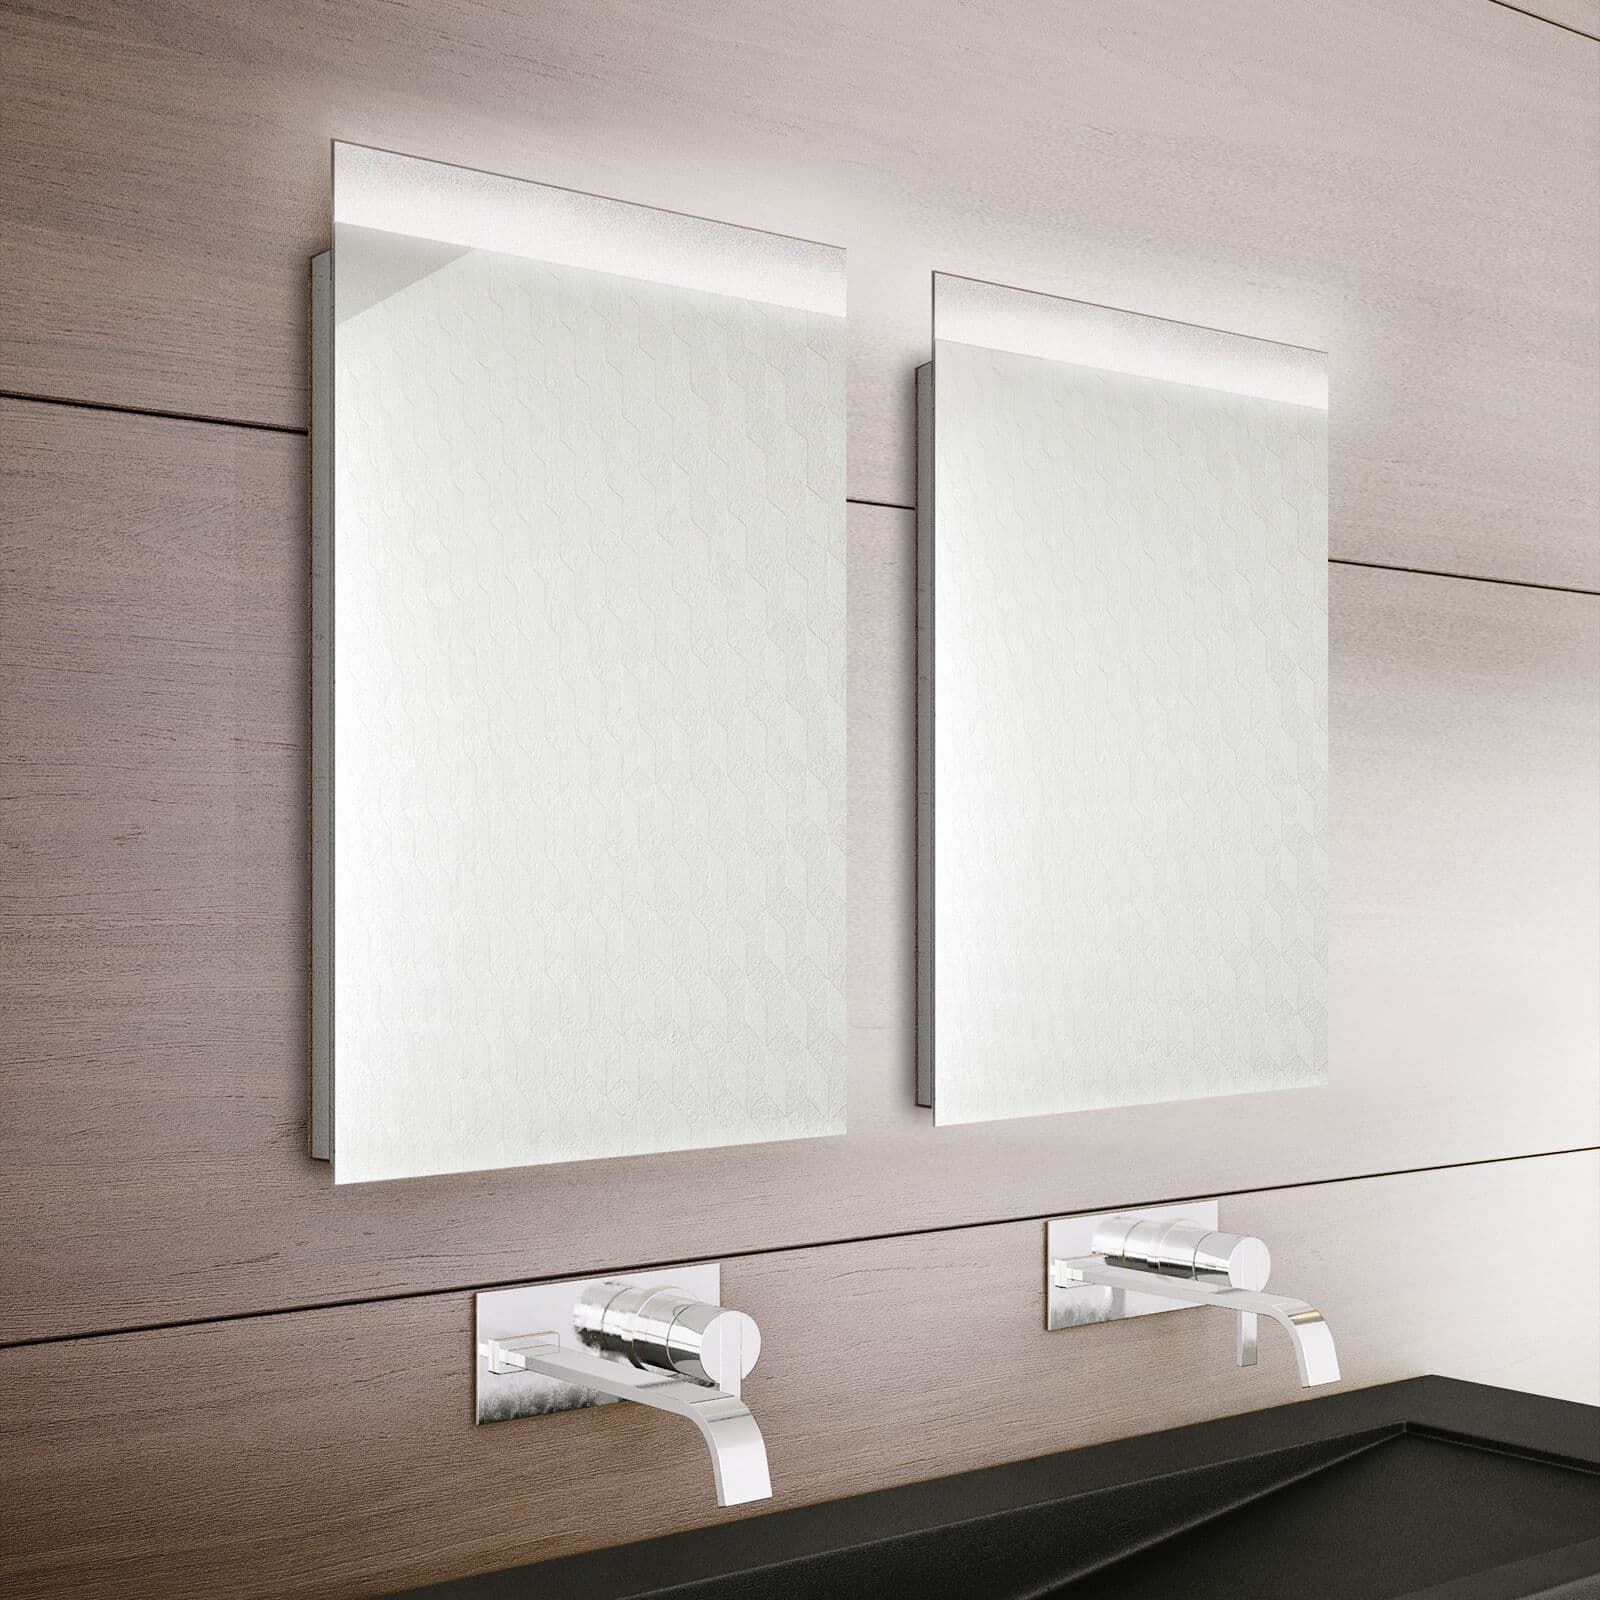 Bathroom Origins Topline 400mm Backlit Led Mirror – B006109 With Regard To Led Backlit Vanity Mirrors (View 11 of 15)